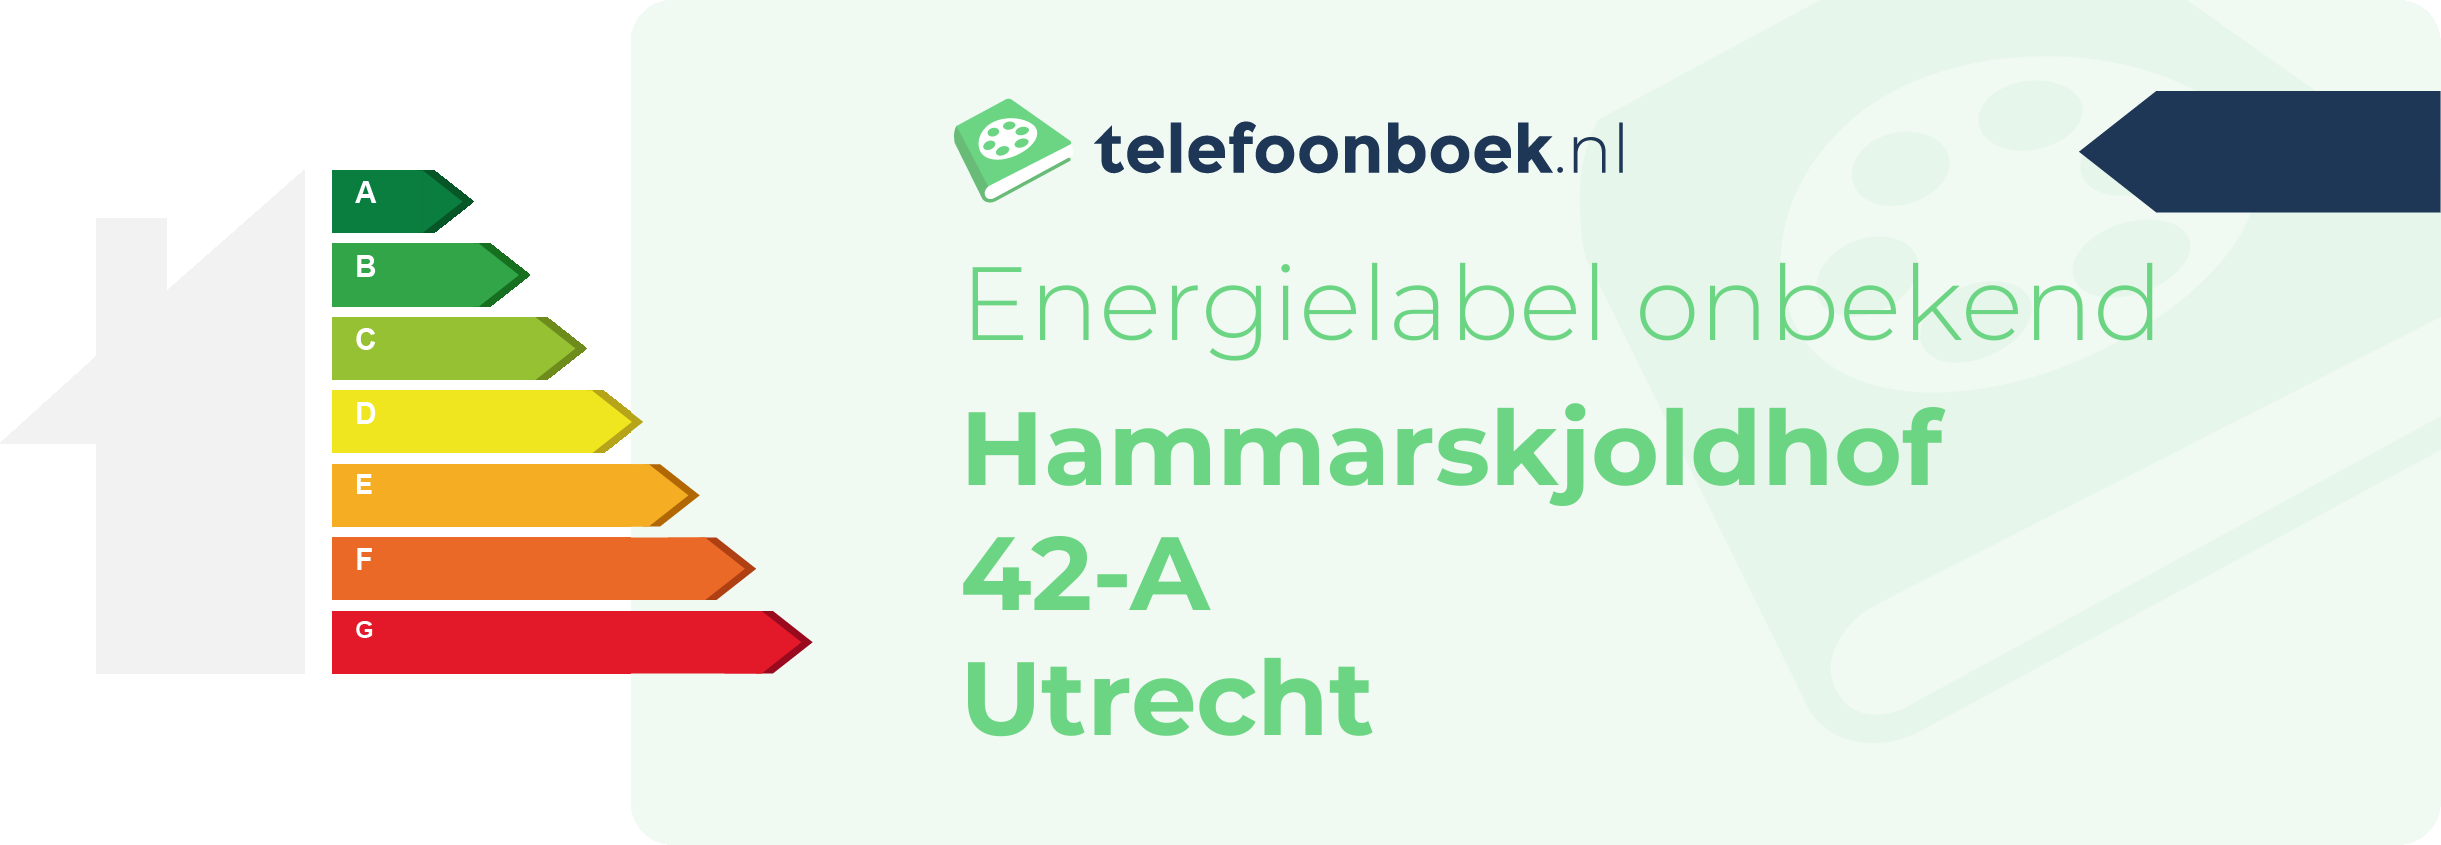 Energielabel Hammarskjoldhof 42-A Utrecht